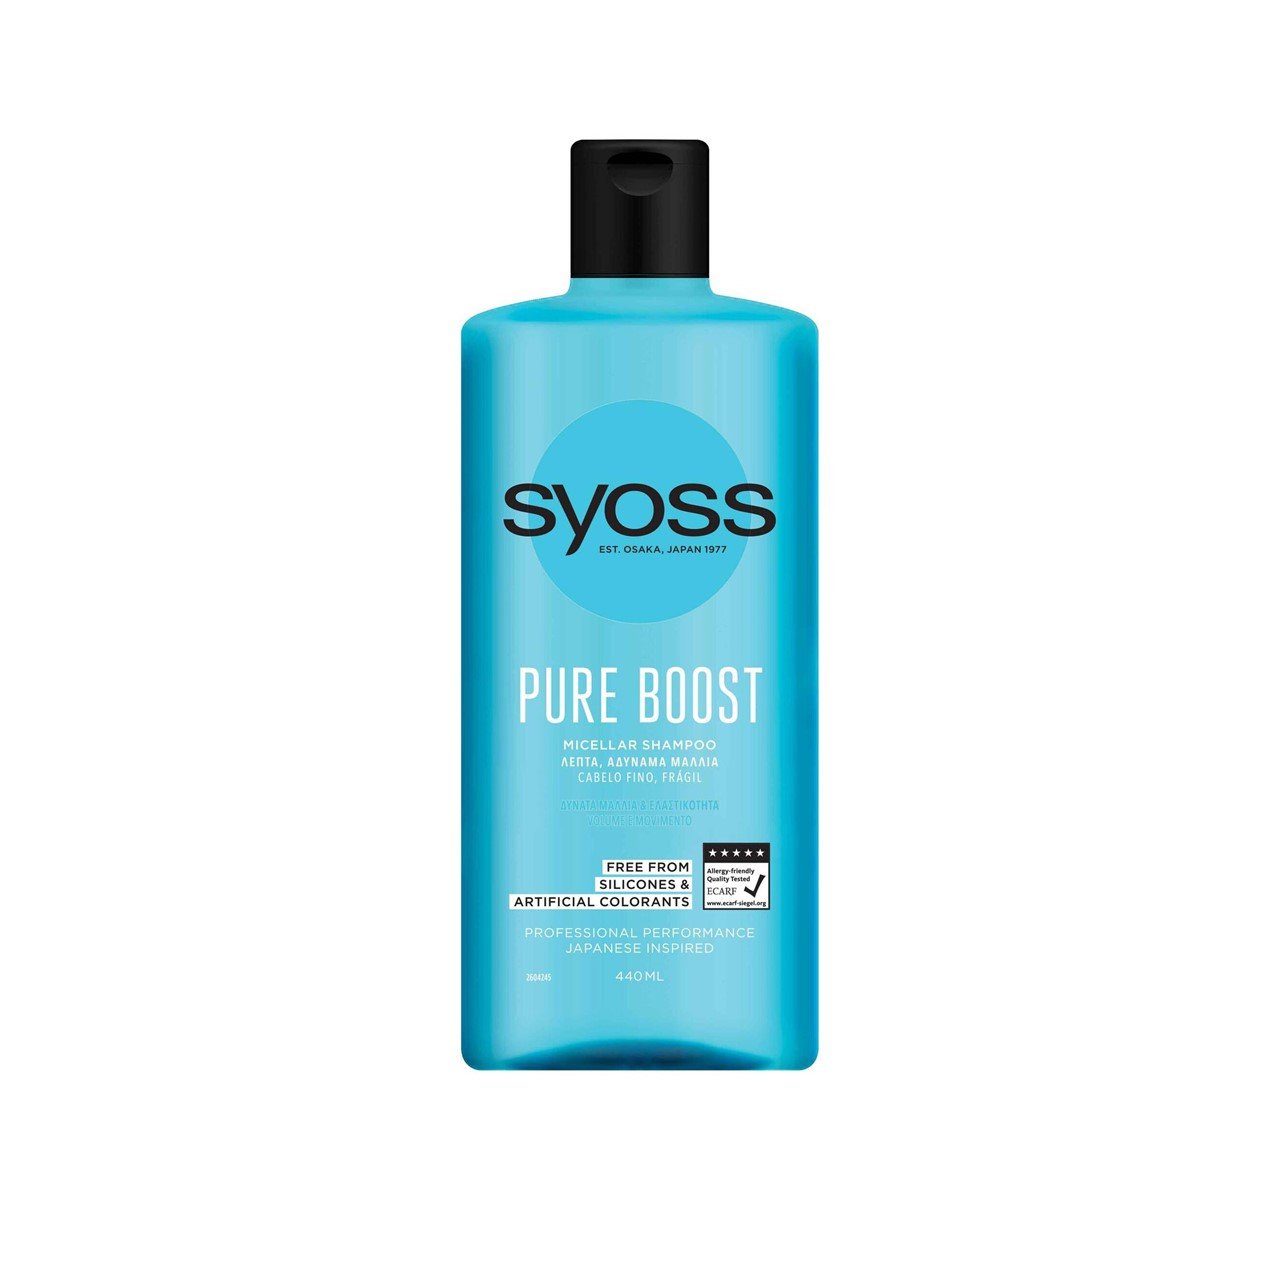 Syoss Pure Boost Micellar Shampoo 440ml